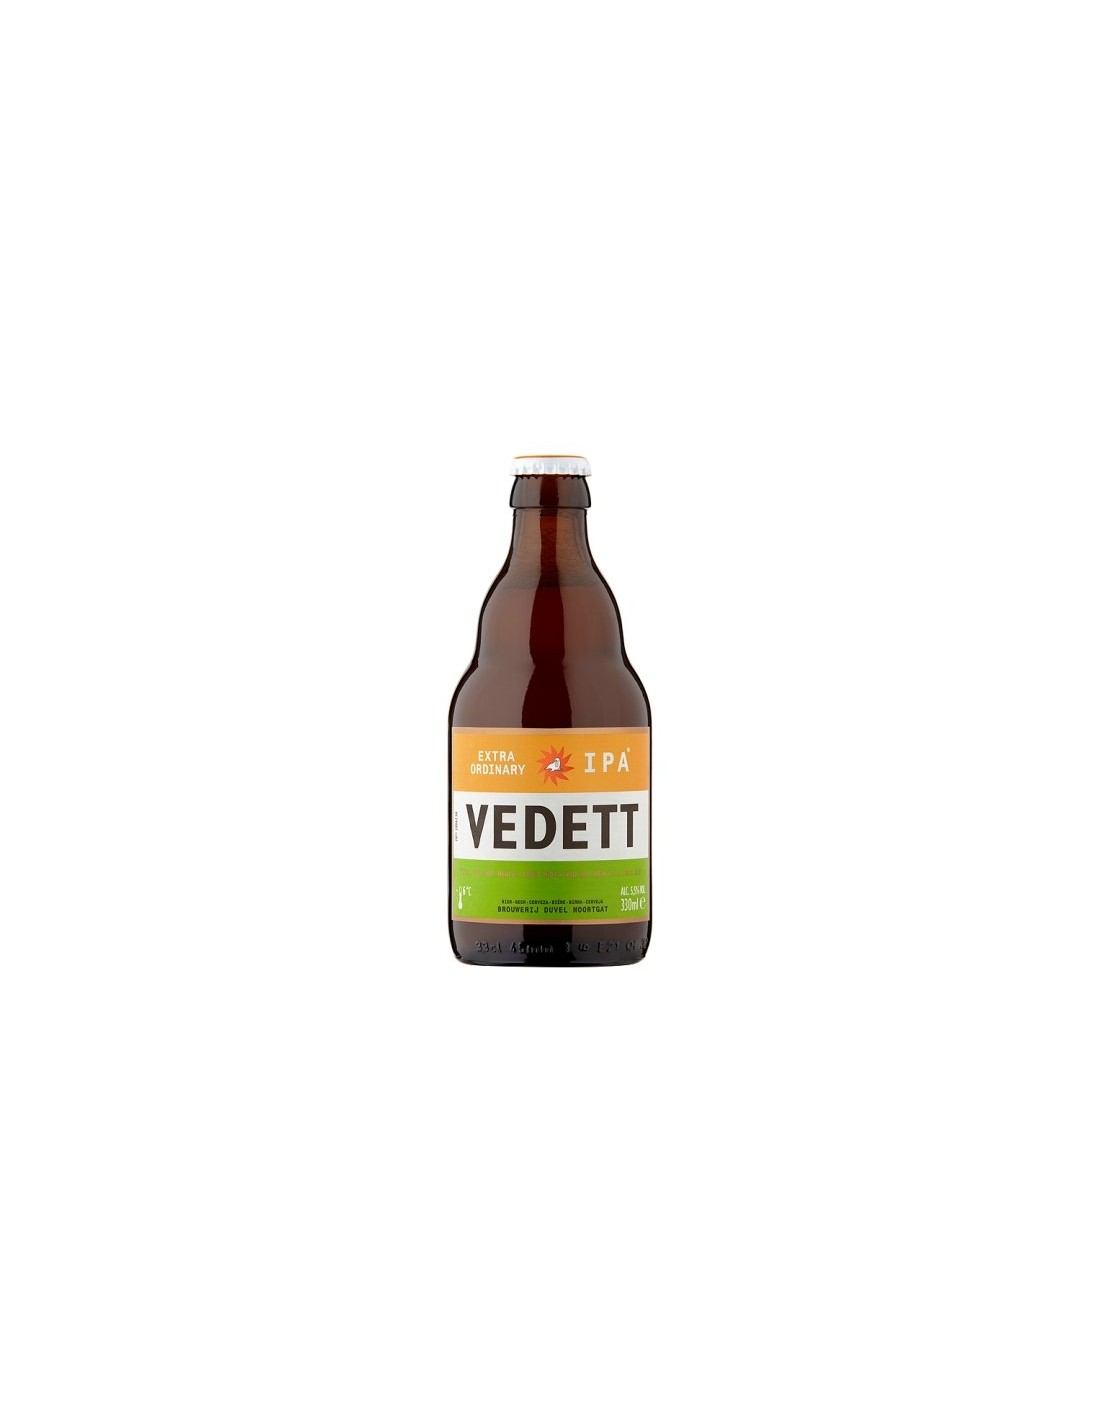 Bere amber, nefiltrata Vedett, 5.5% alc., 0.33L, Belgia alcooldiscount.ro